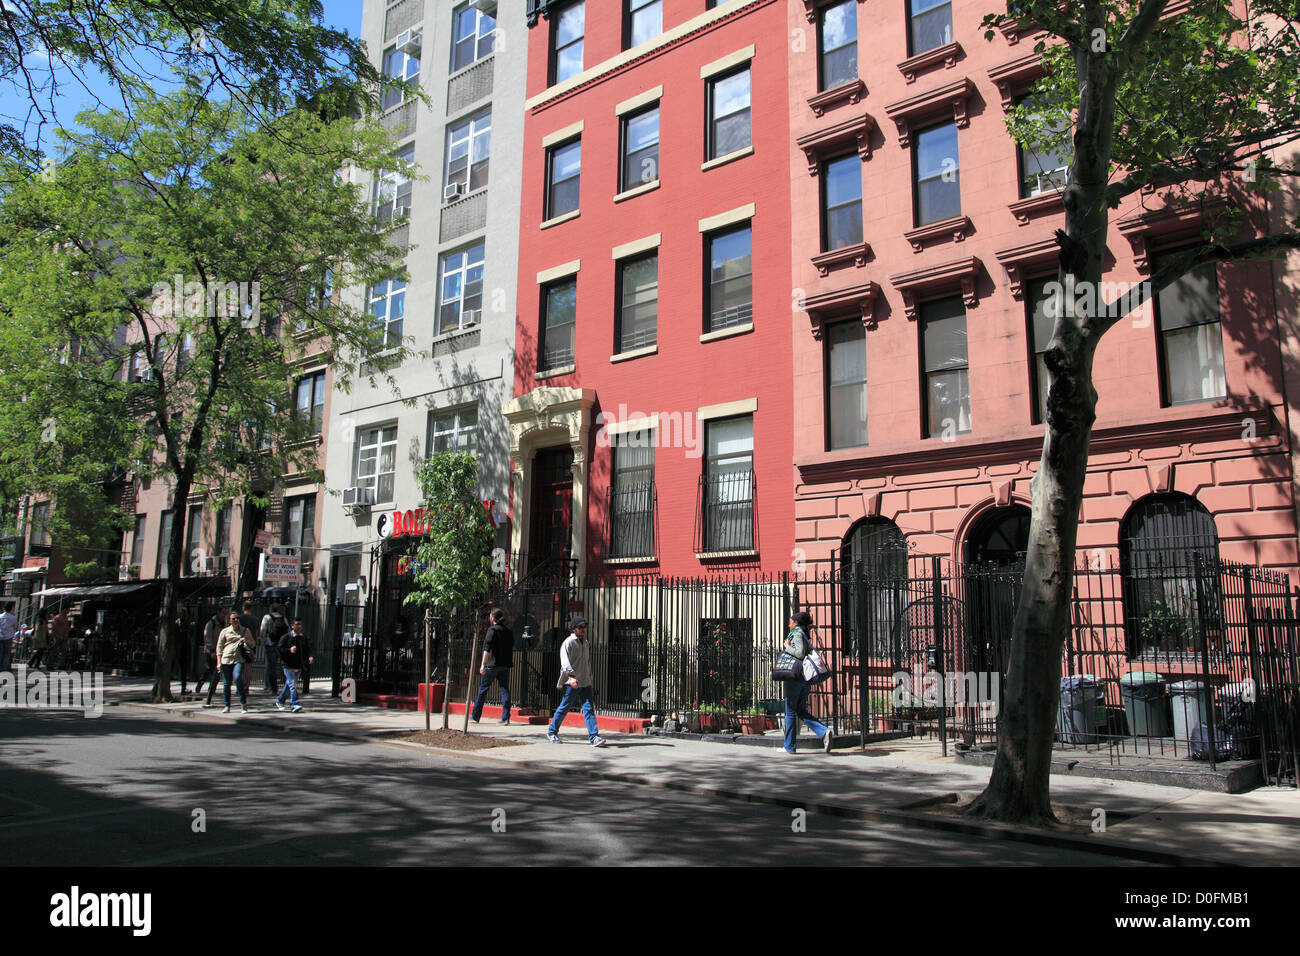 Place Saint Marc, Greenwich Village, East Village, Manhattan, New York City, USA Banque D'Images